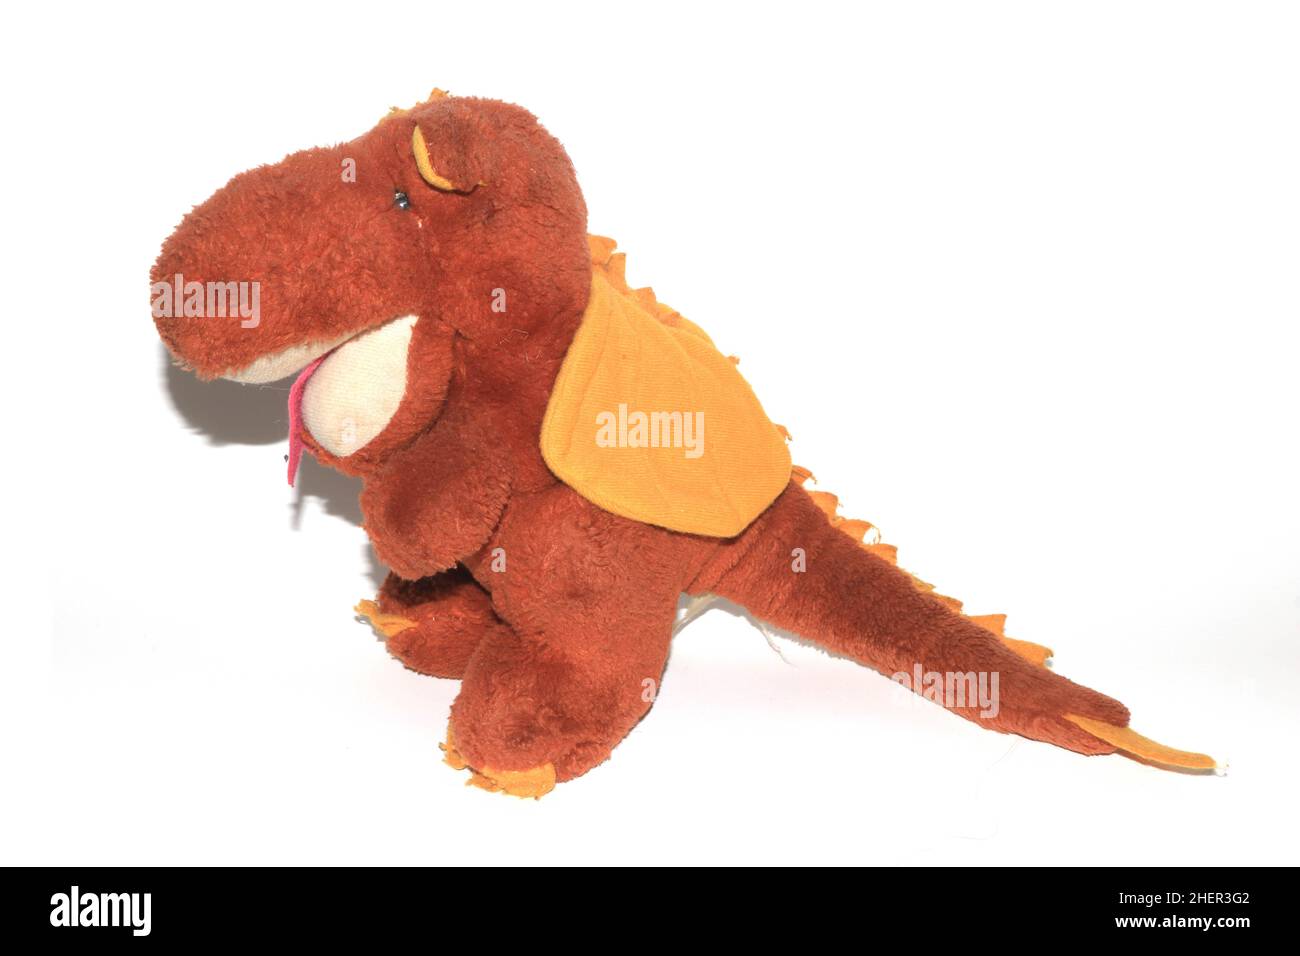 A Nostalga Old Stuffed Soft Toy Dragon Dinosaur Stock Photo